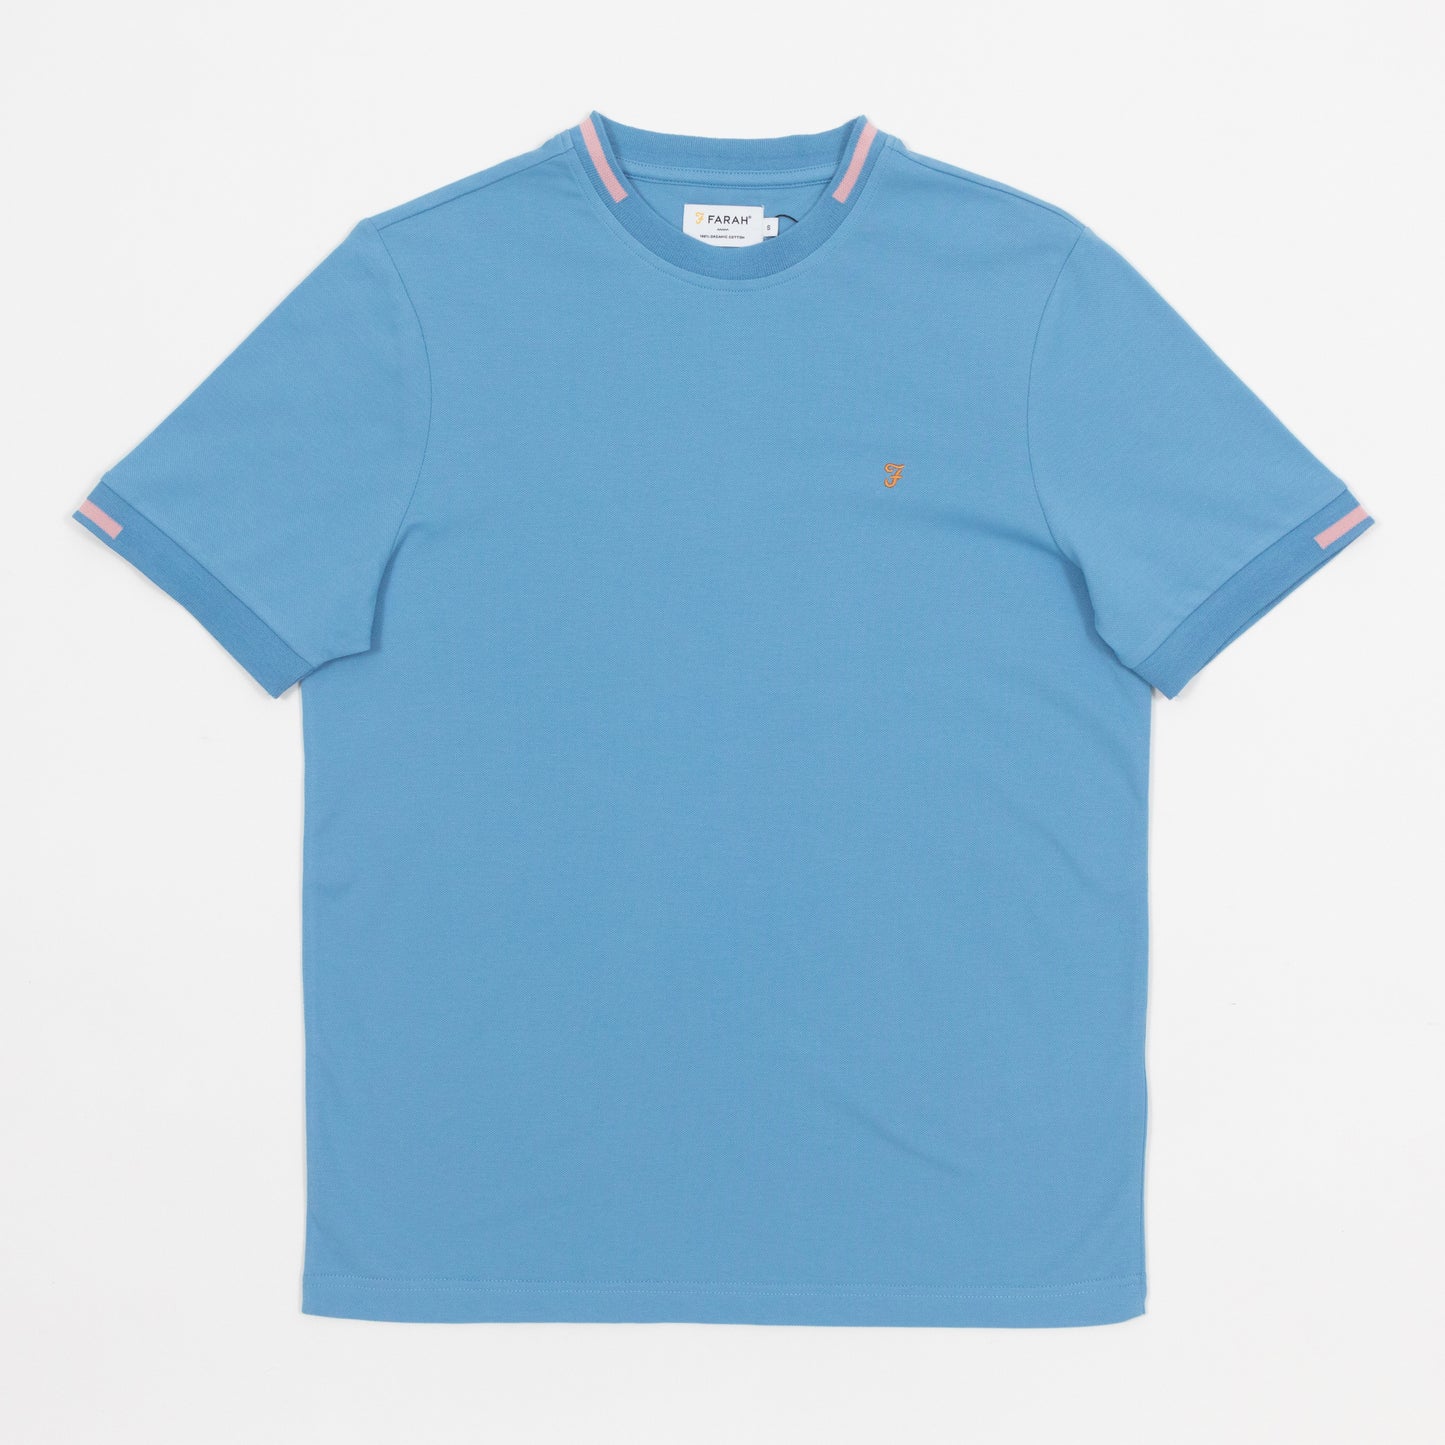 FARAH Bedingfield Tipping T-Shirt in BLUE